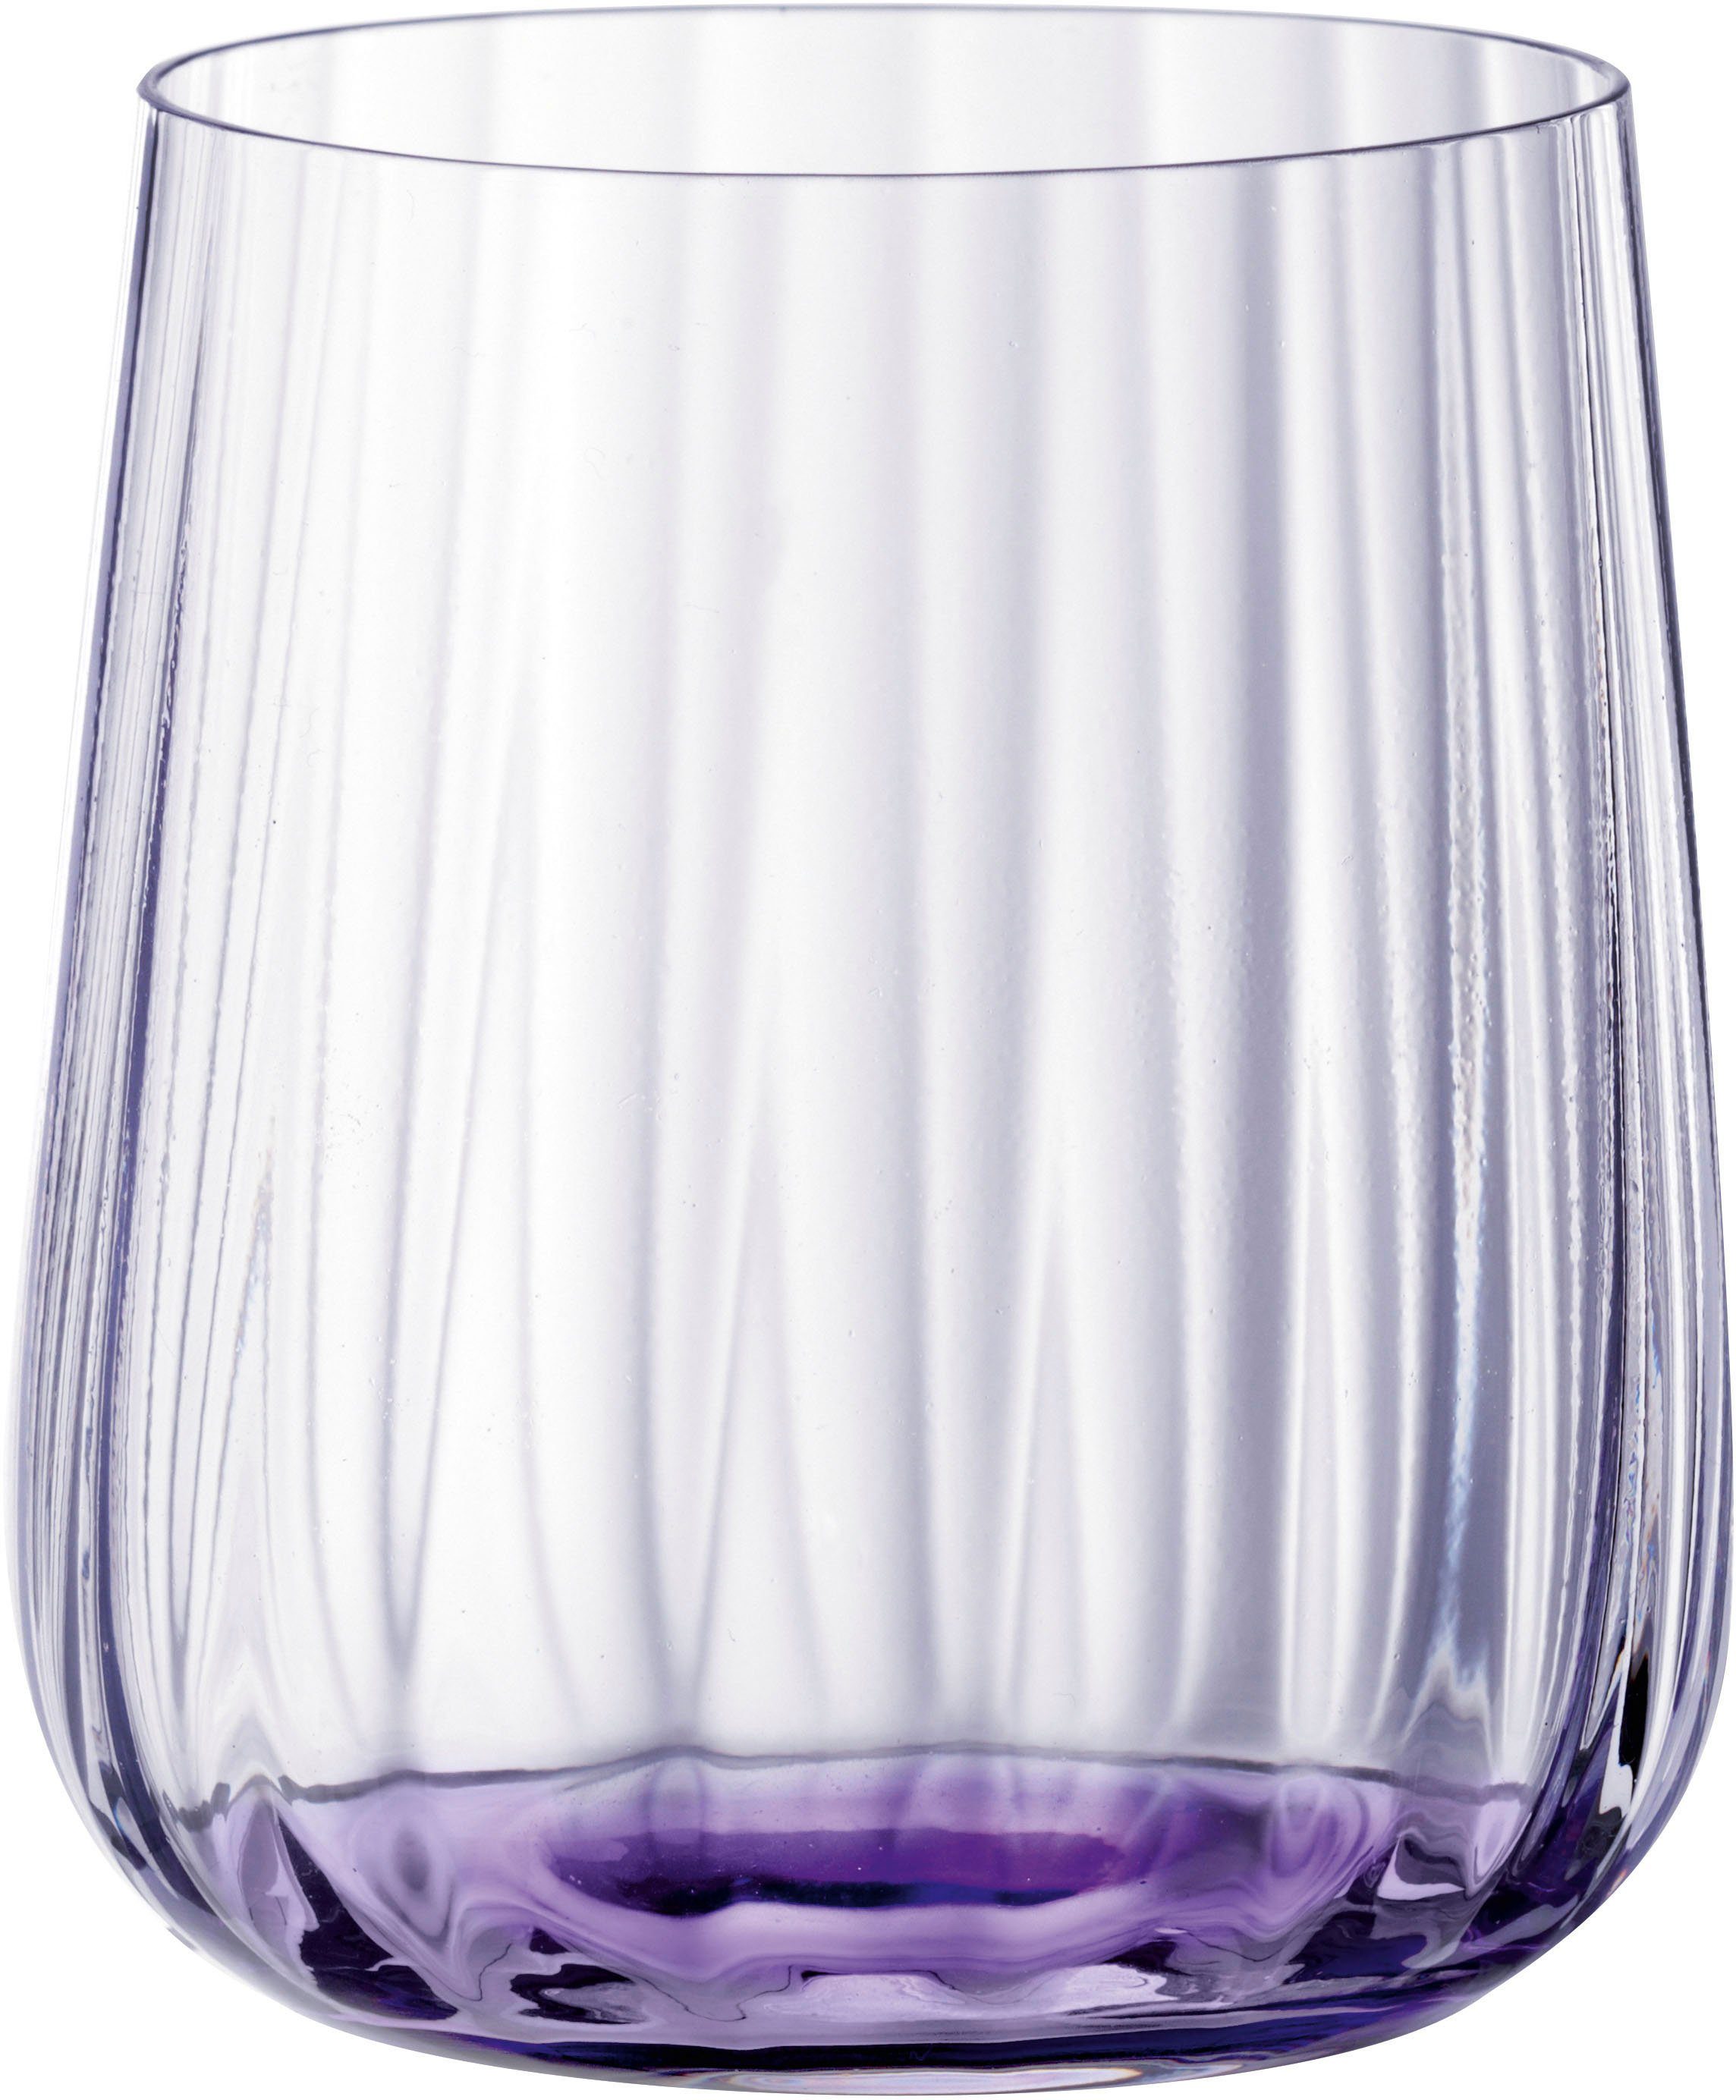 SPIEGELAU Becher LifeStyle, Kristallglas, 340 ml, 2-teilig lilac